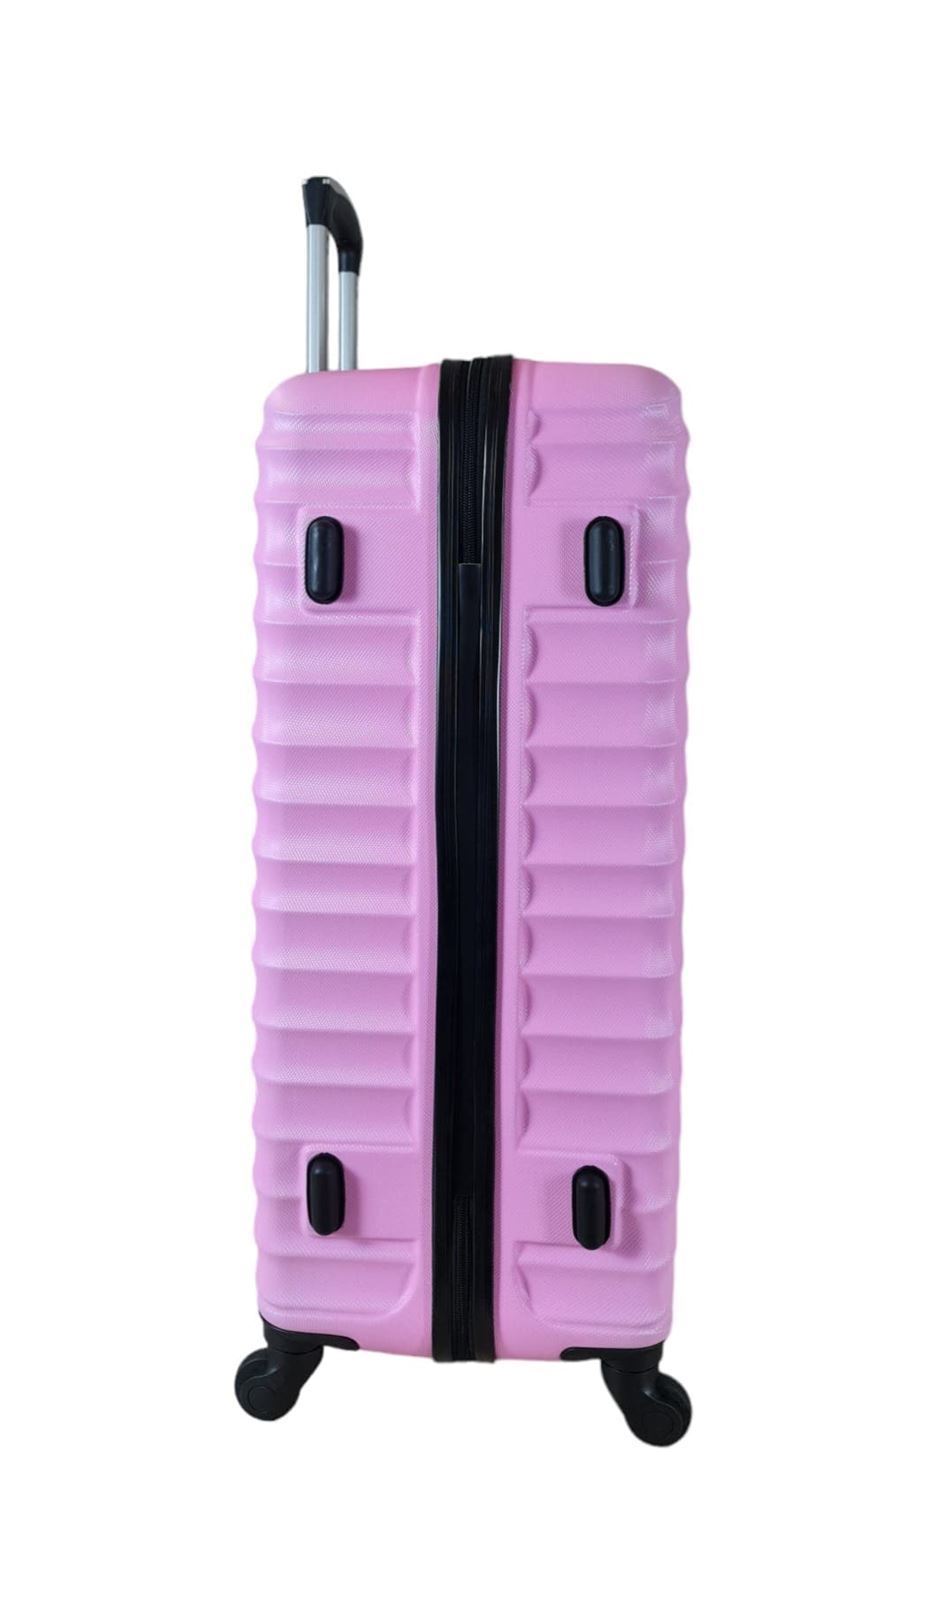 Maleta VIP Grande 75x46x30 cms Muy Ligera Barata Material ABS color Rosa Barbie - Imagen 4